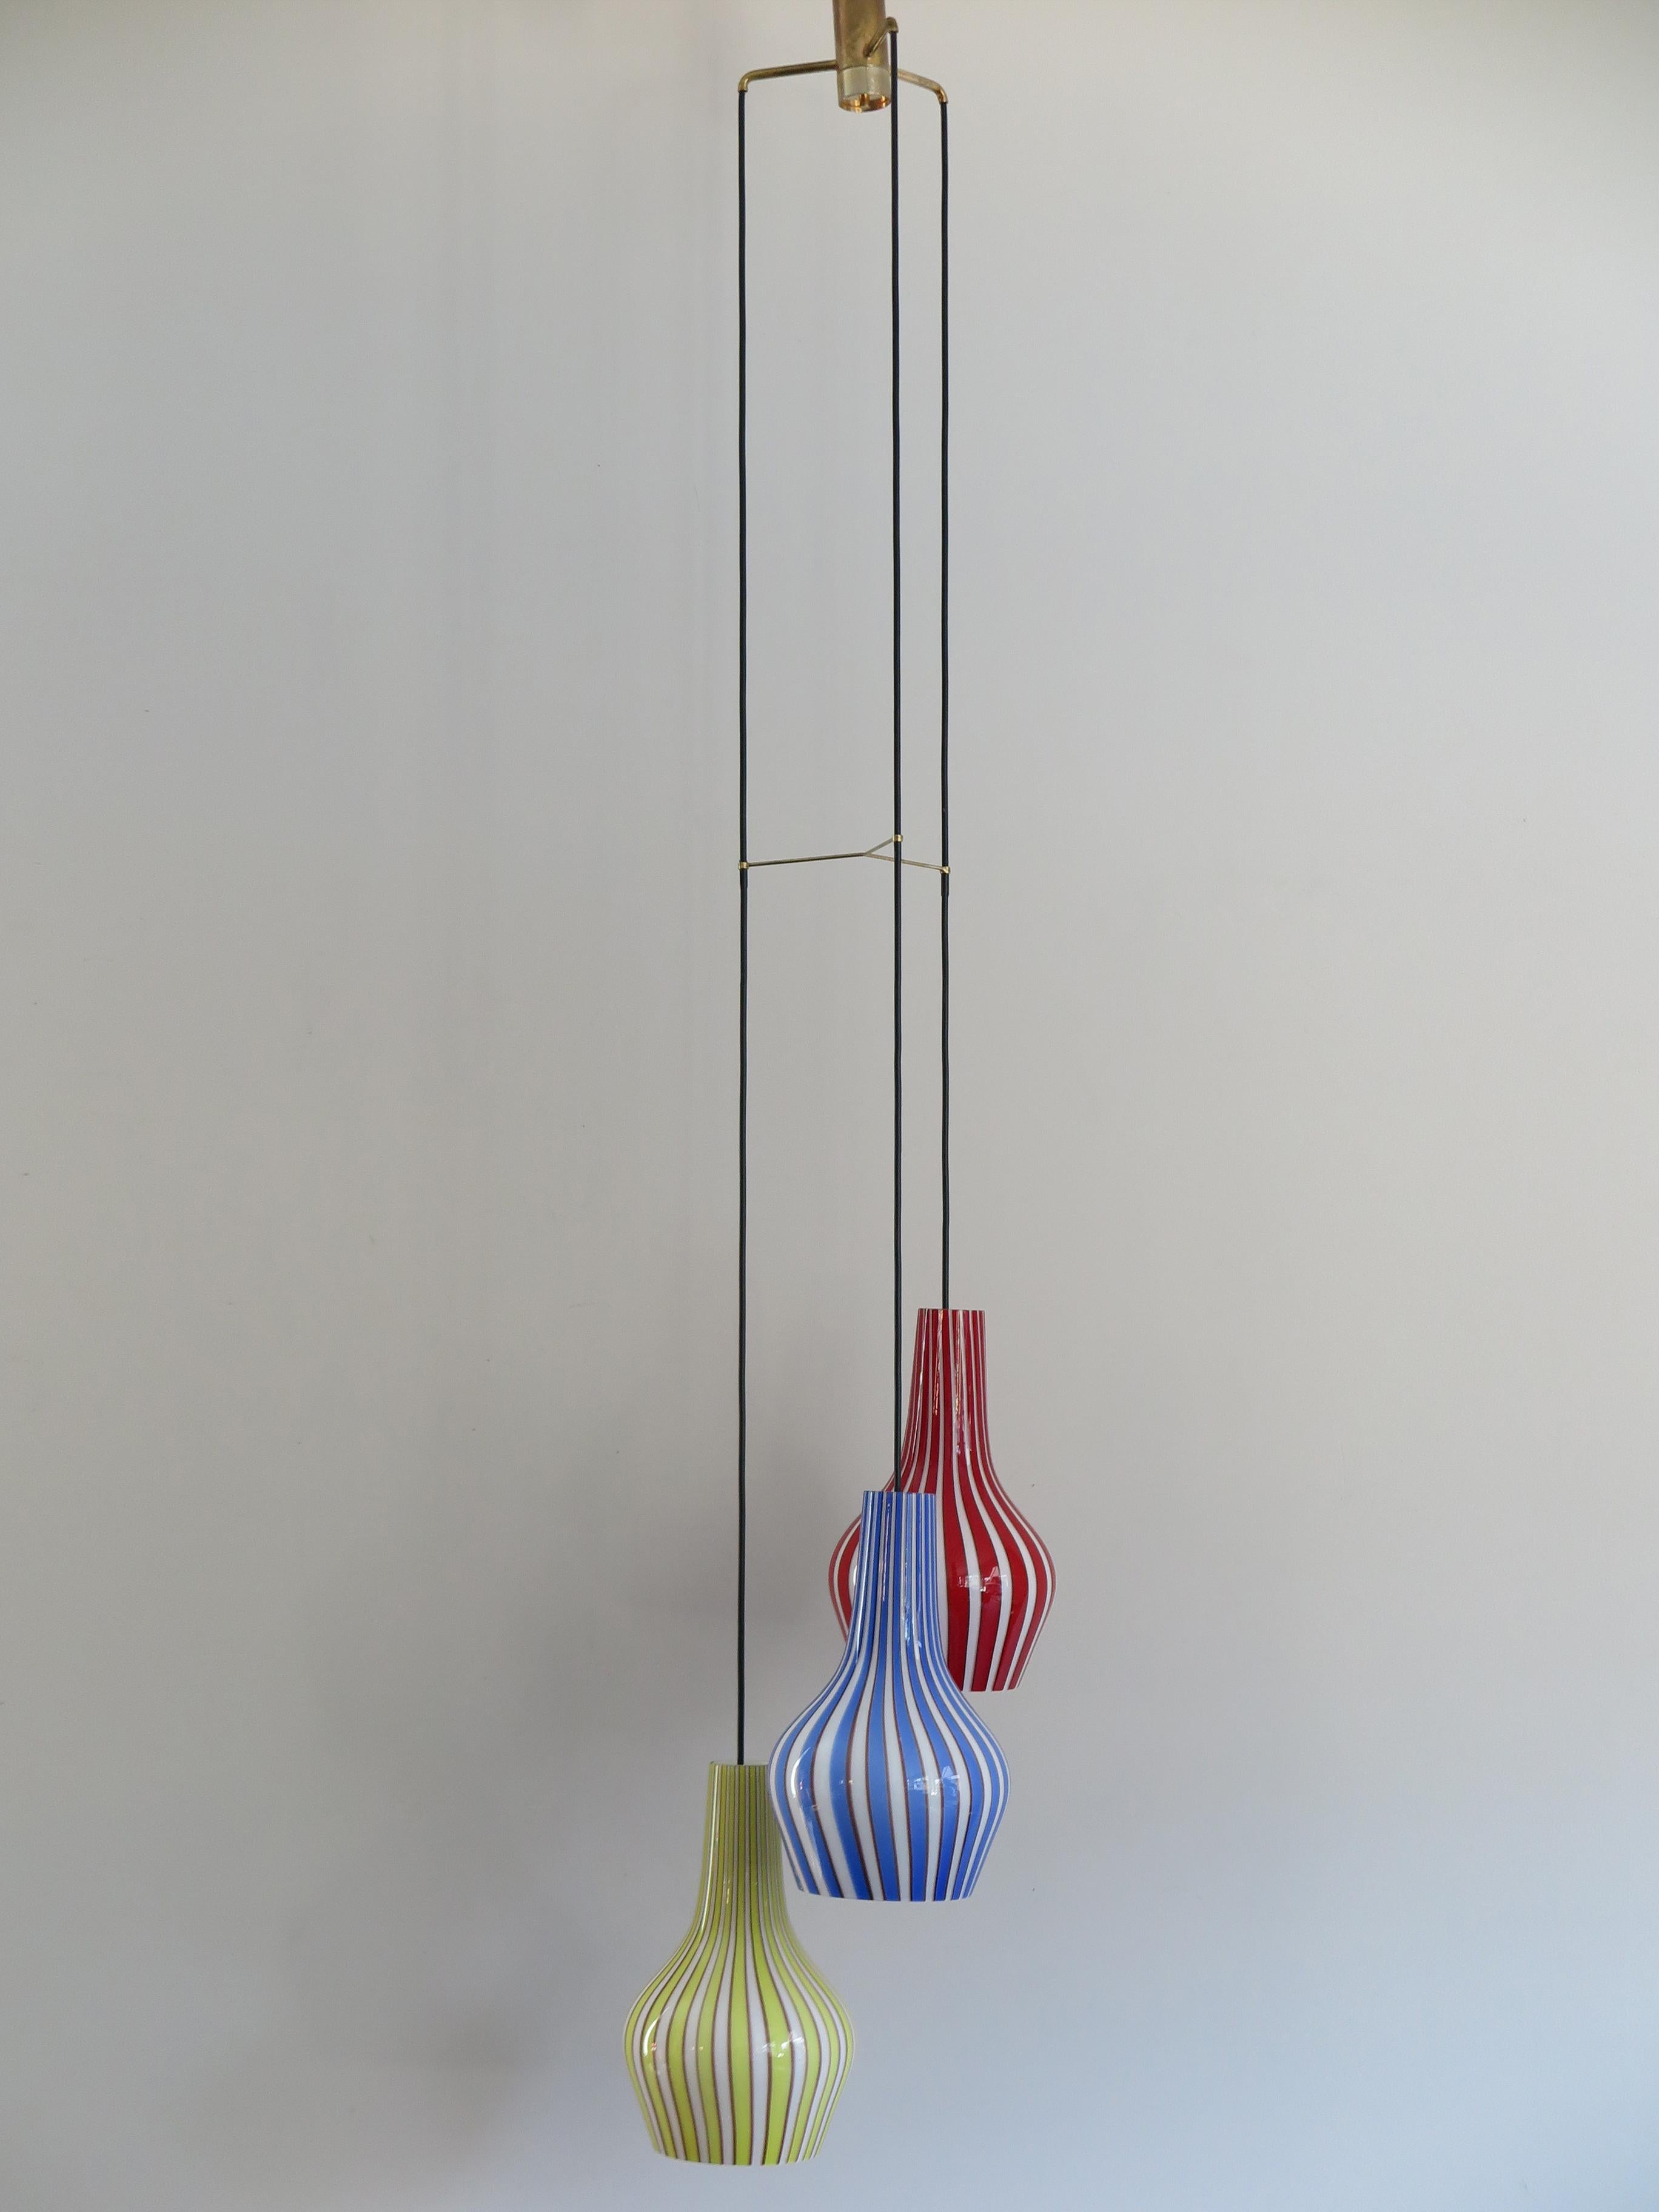 Italian Flavio Poli Mid-Century Modern Design Pendant Glass Lamp for Seguso Italy 1950s For Sale